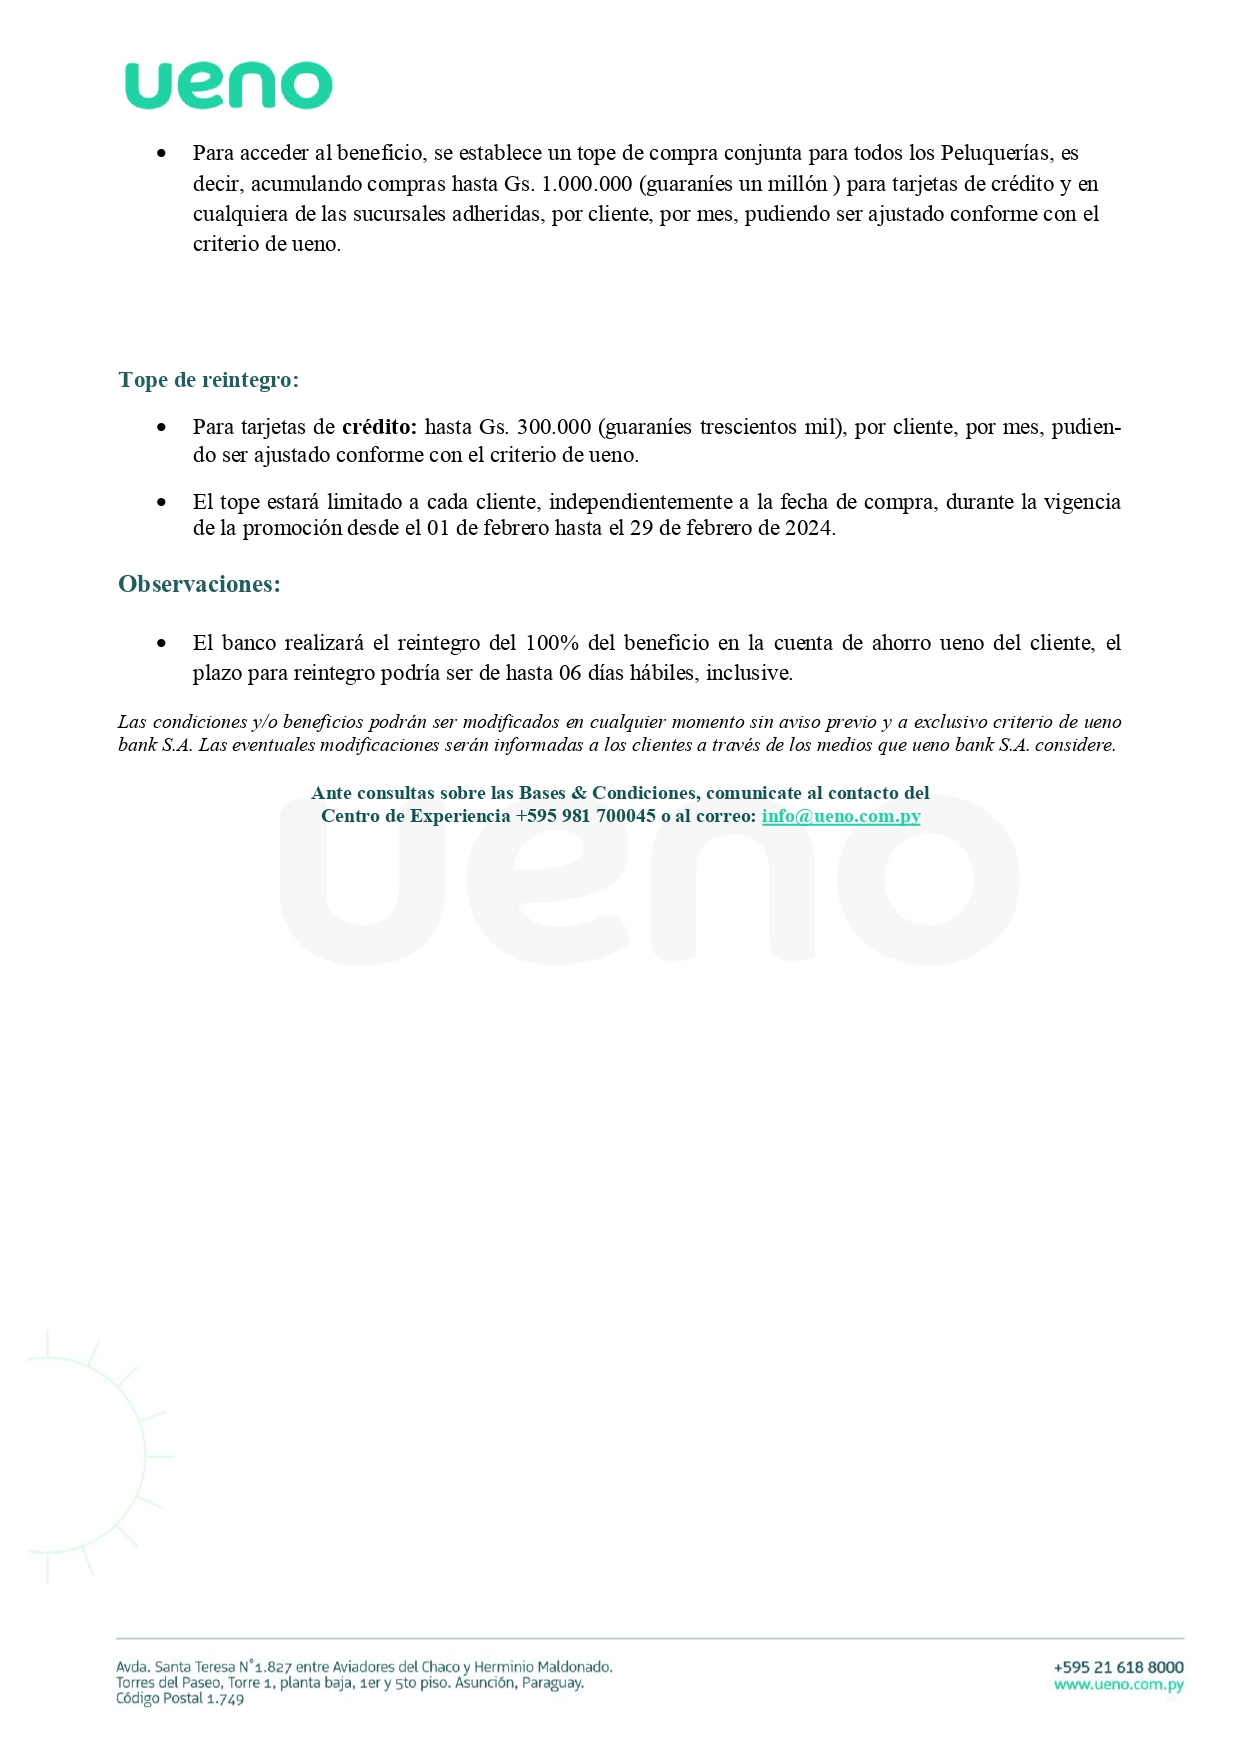 ByC - PELU Y SPA FEBRERO 2024 (REV) (1) (1)_page-0002.jpg